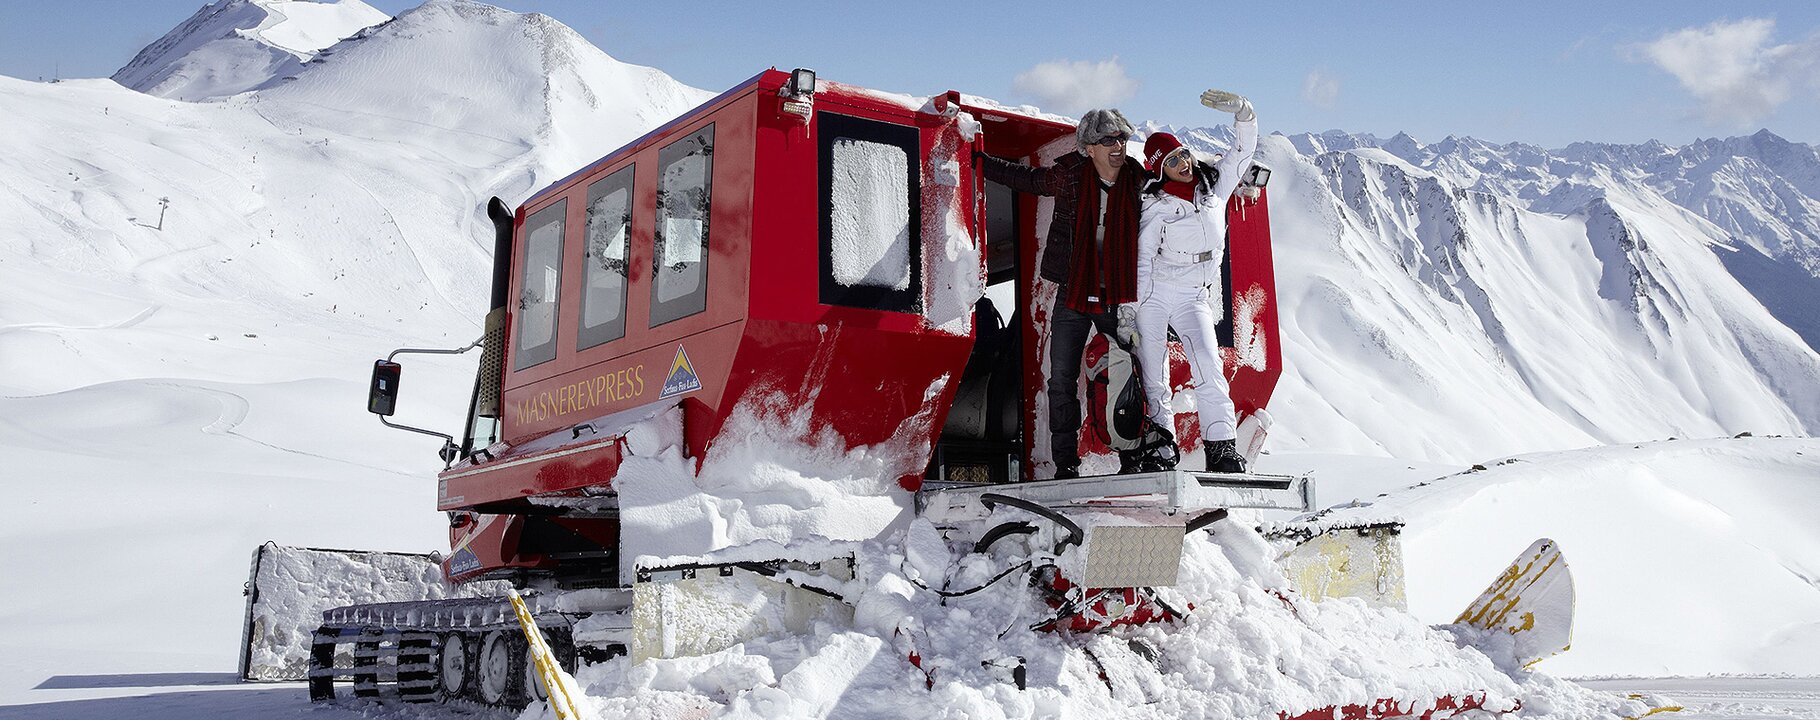 Masner Express - Winterlandschaft genießen | © Serfaus-Fiss-Ladis/Tirol